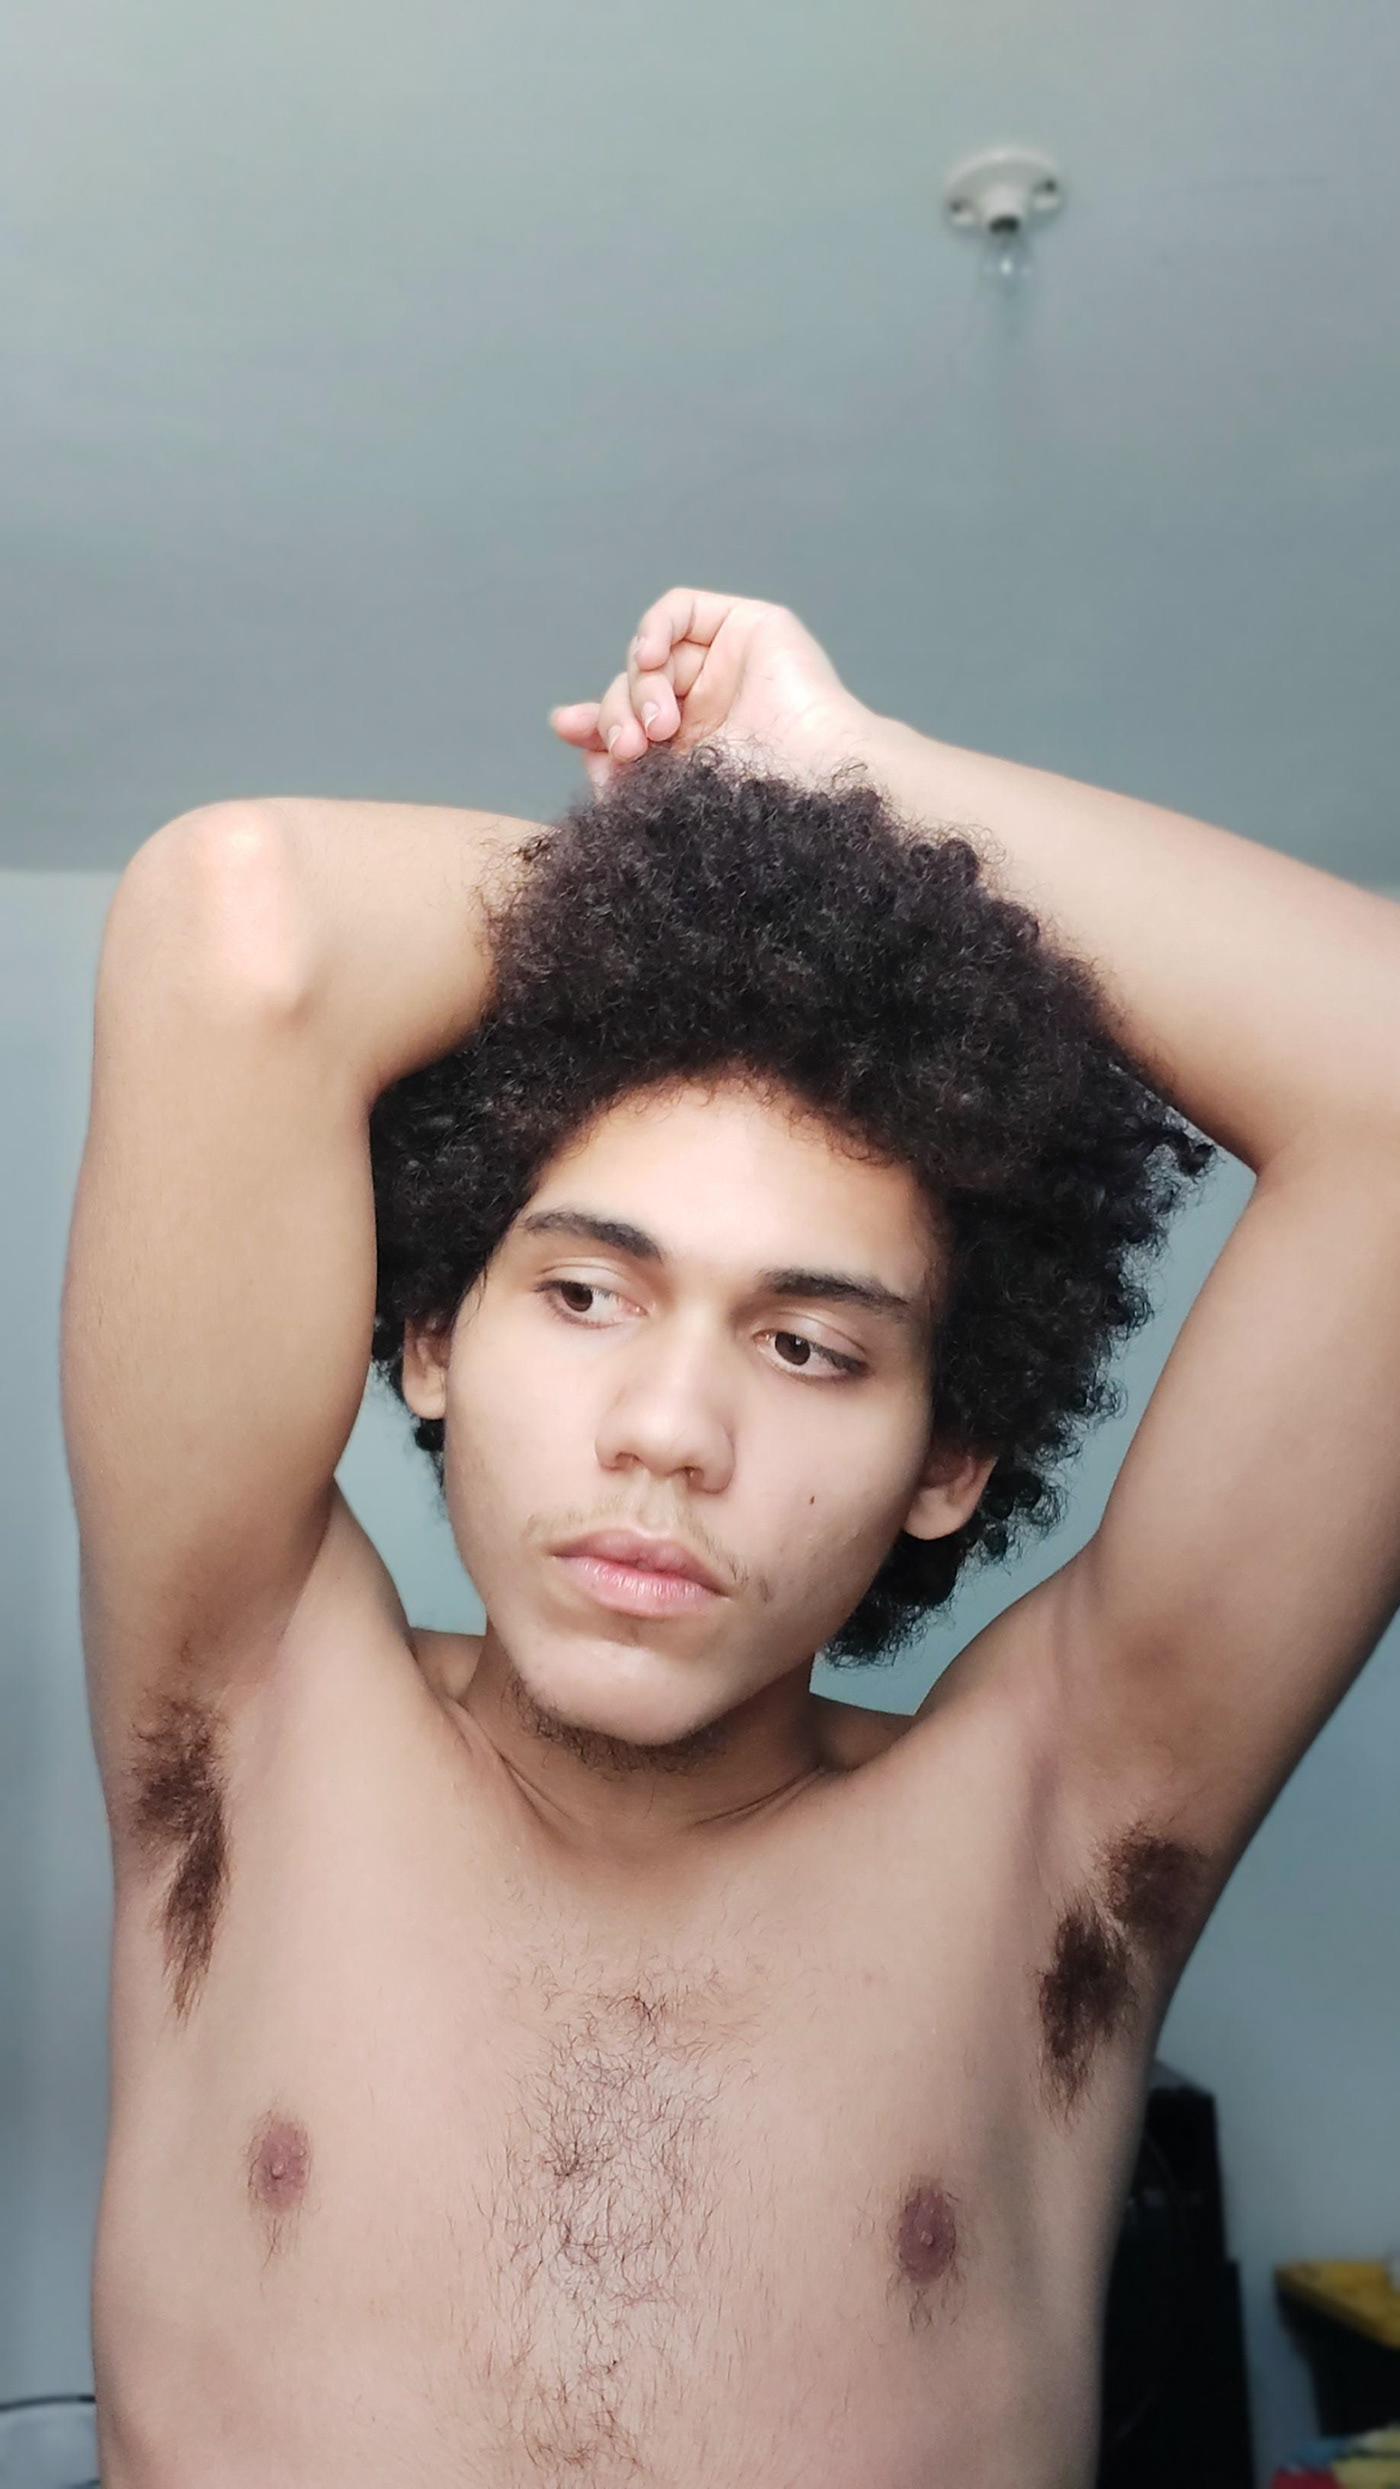 arms hippie natural gay model curly hair natural hair hispanic latino young adult light sunlight Men Hair cute young guy armpits